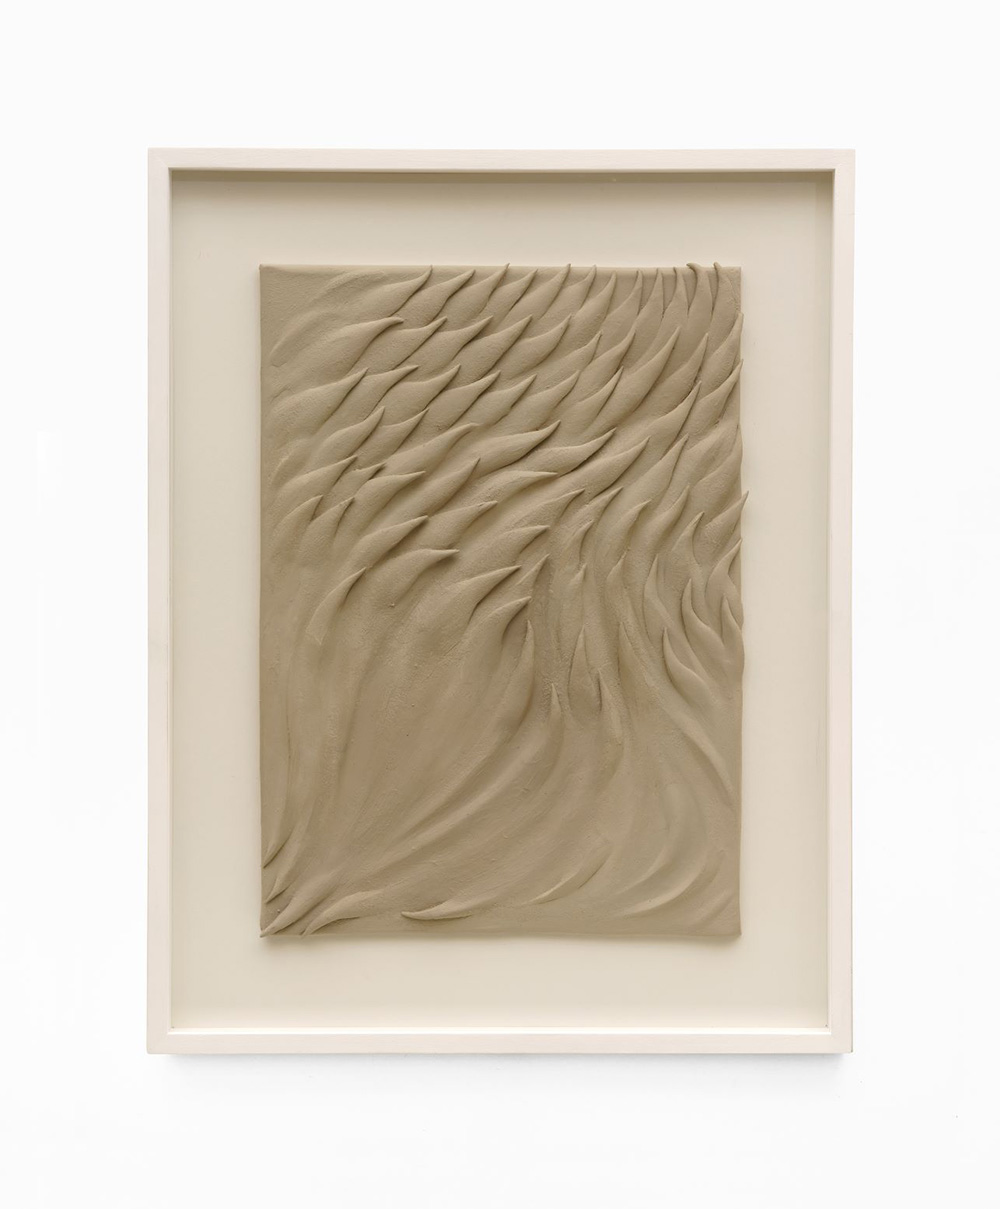 03_Riverscape (Keramik) Immanuel Birkert Riverscape (2), 2020 Öl auf Keramik 45 x 35 cm, gerahmt